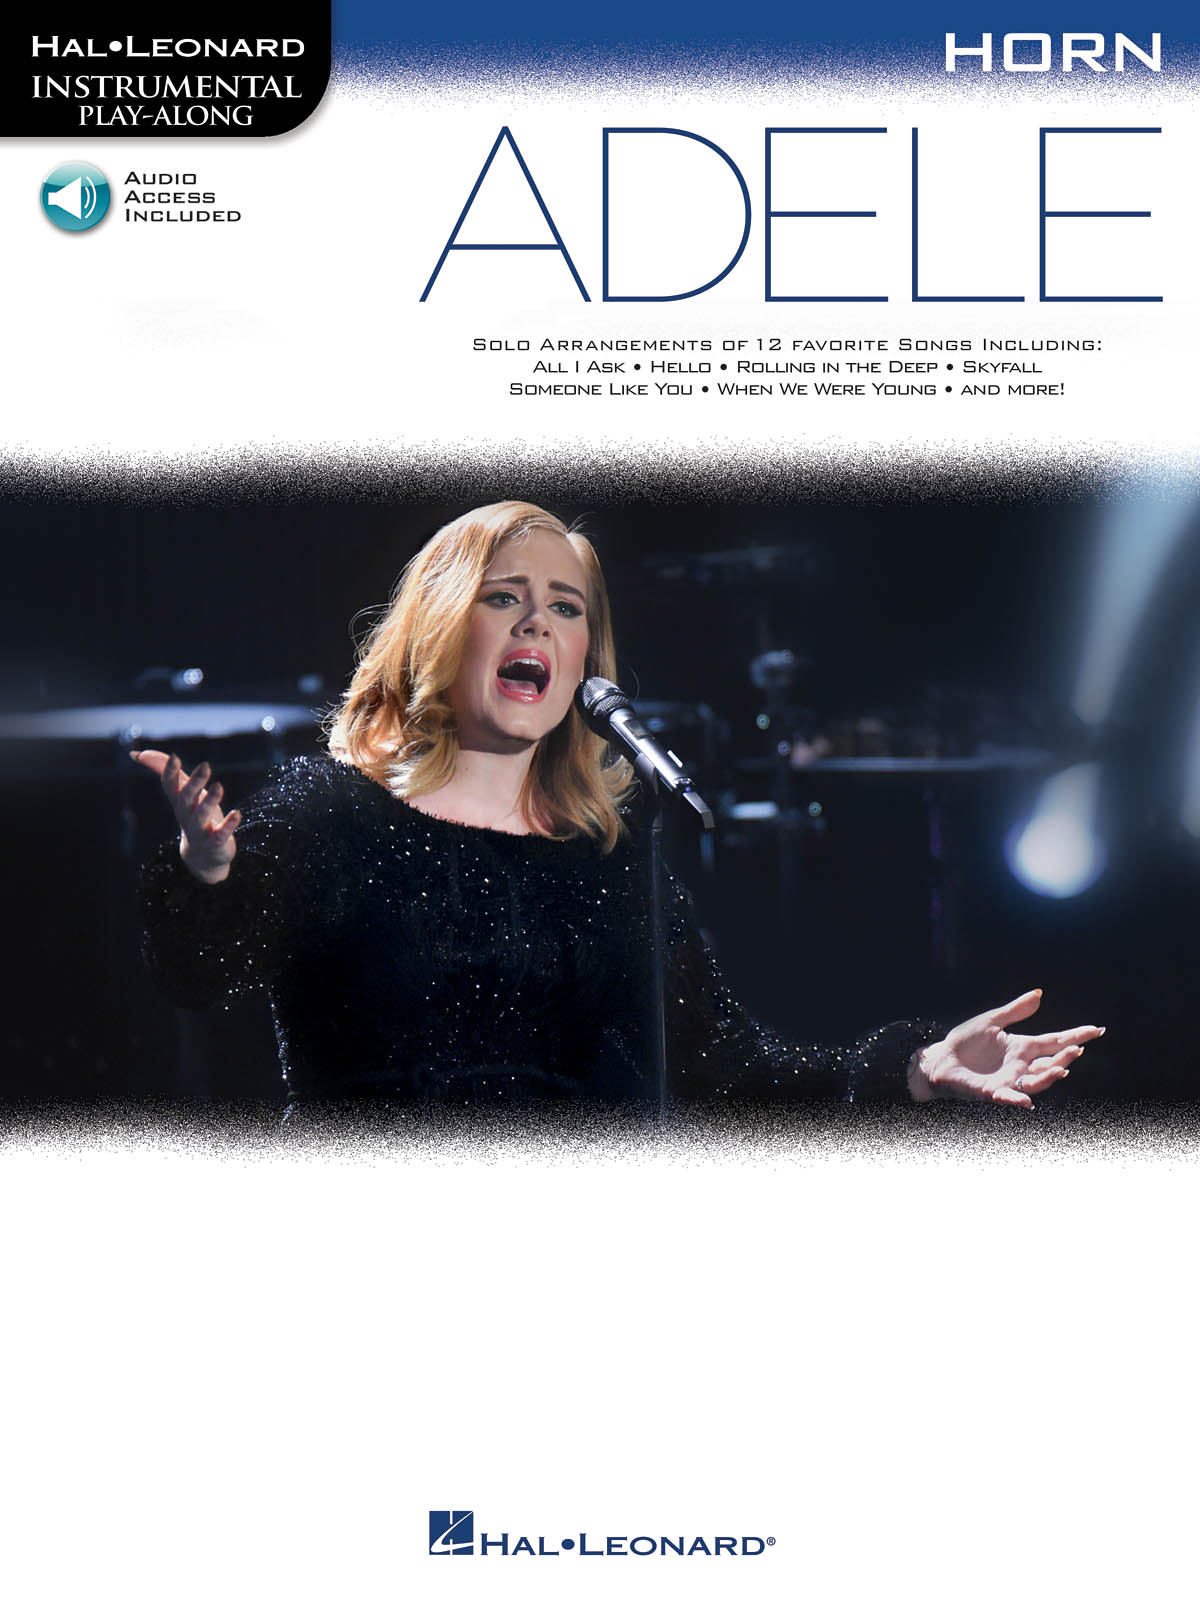 Hal Leonard Instrumental Play-Along: Adele Hoorn